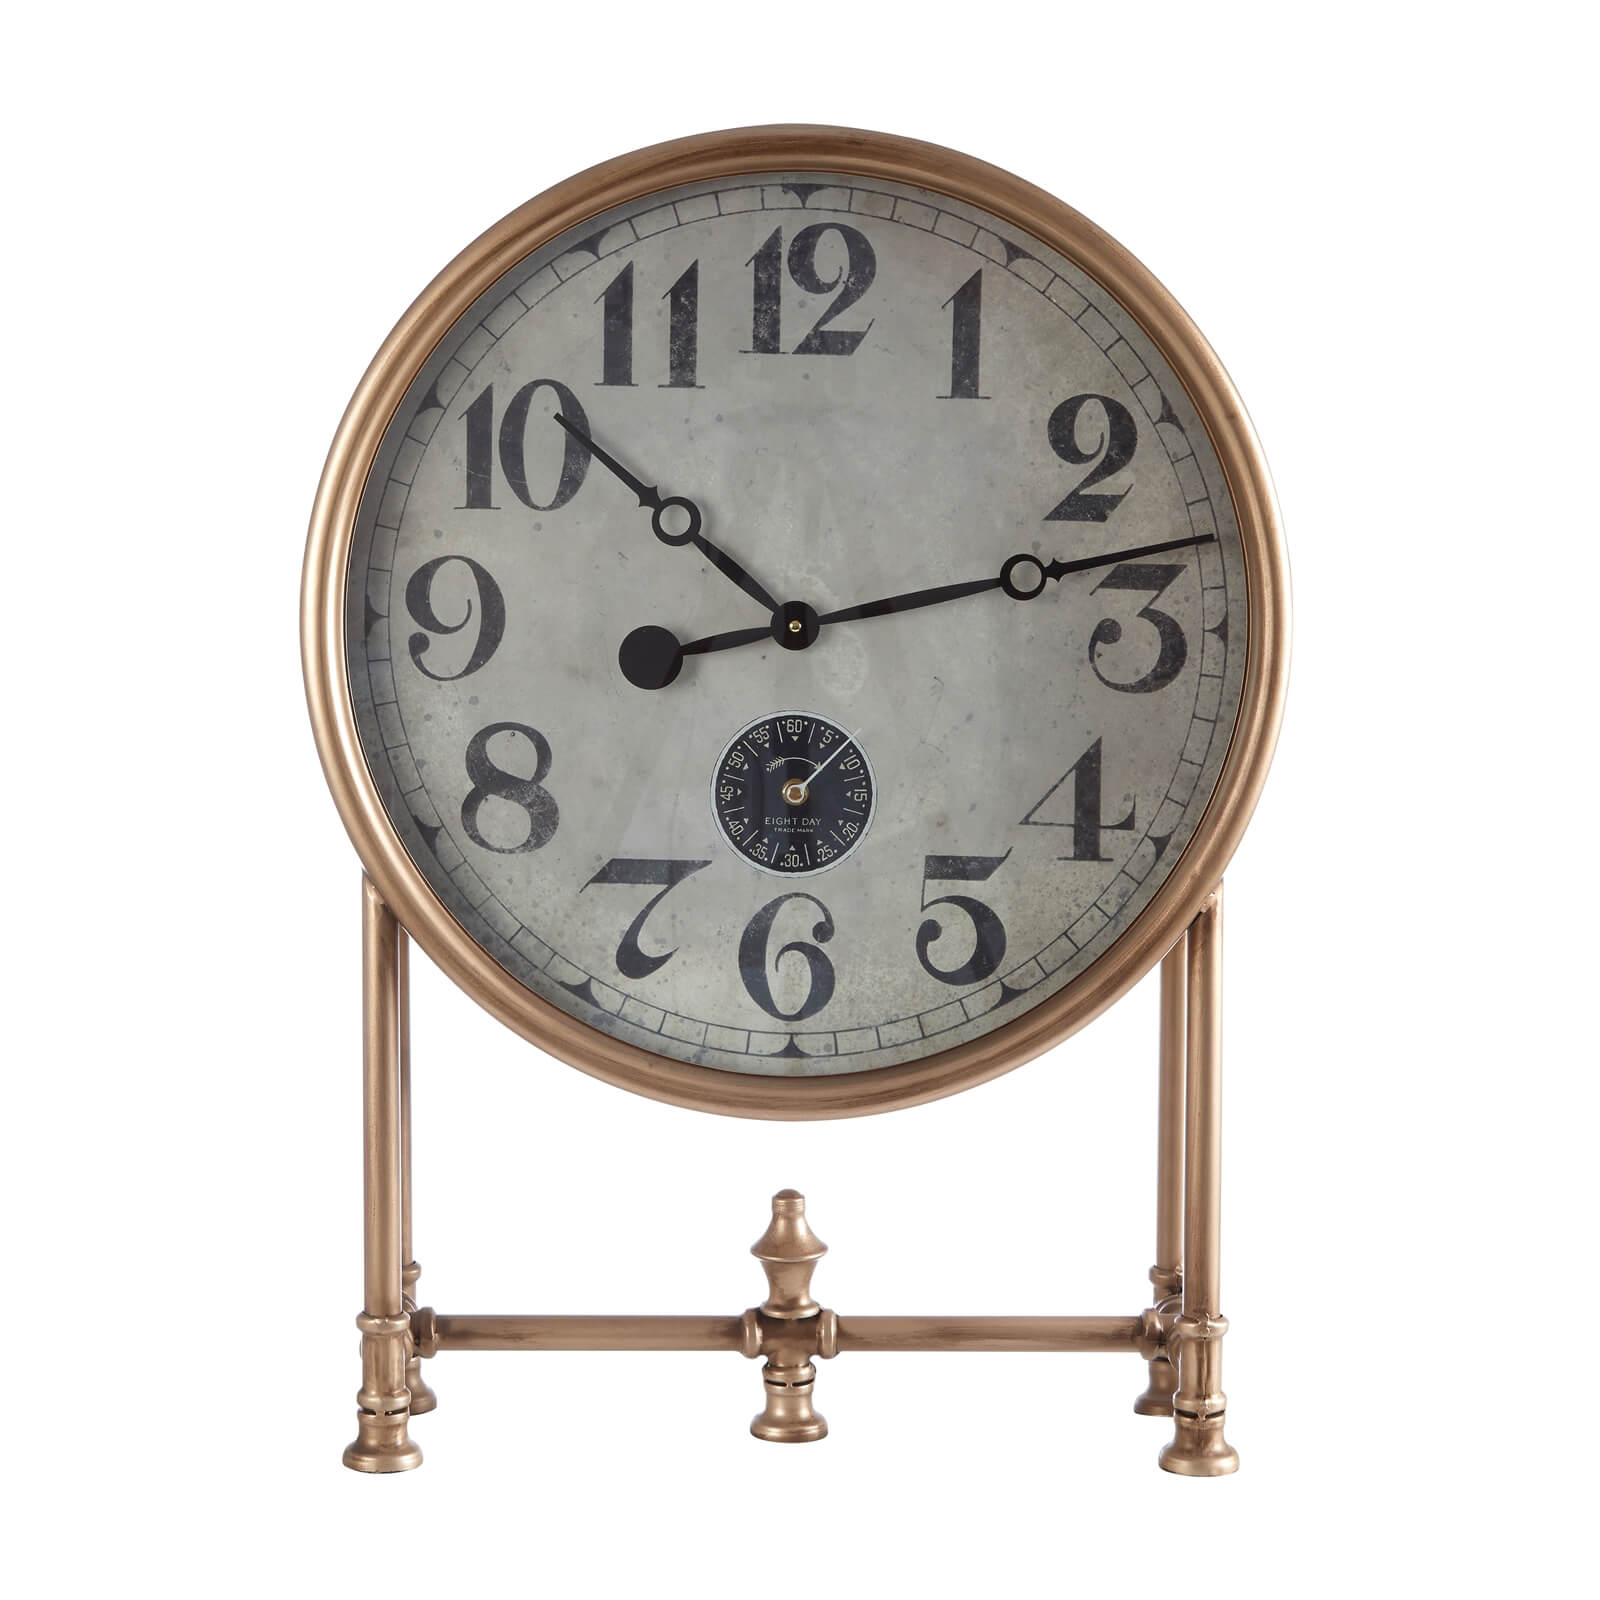 Photo of Hayden Table Clock - Gold Finish